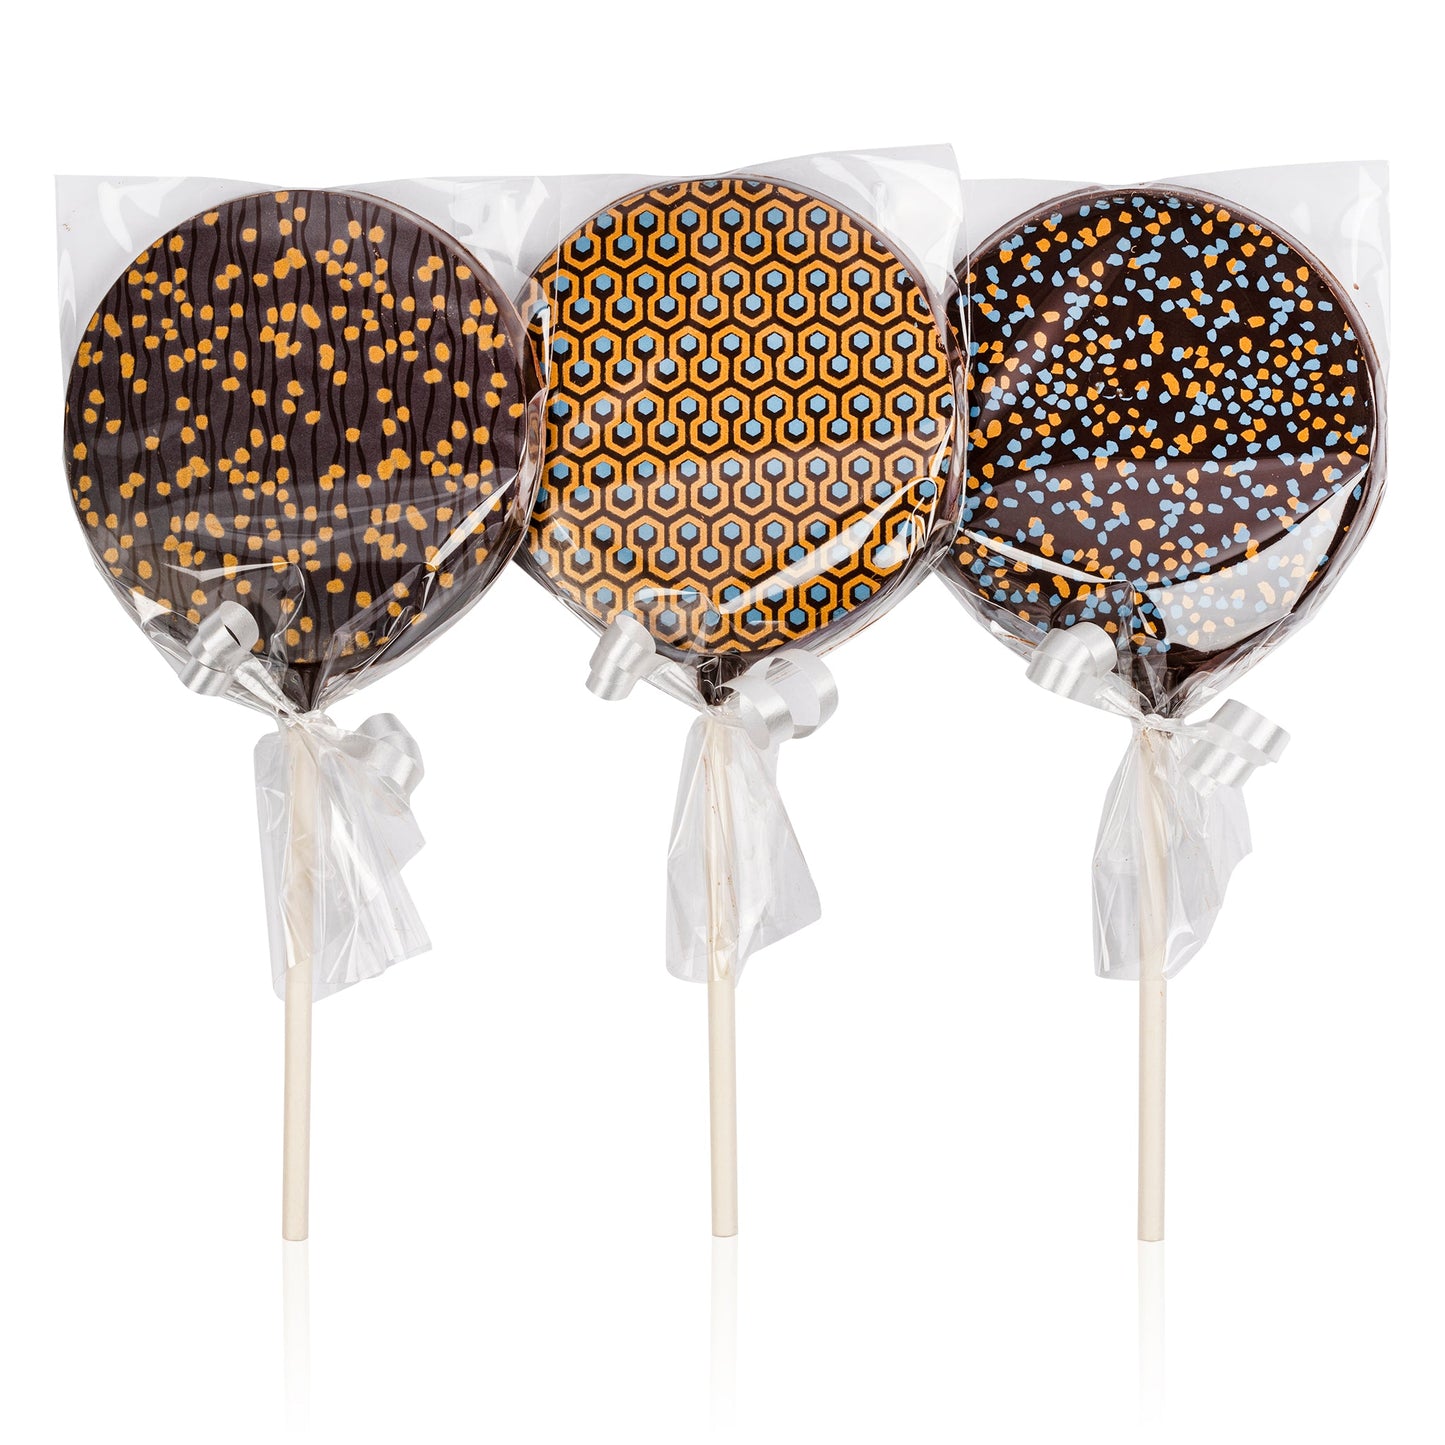 Semisweet Chocolate Lollipop - SET OF 3 - Choose Variety Inside